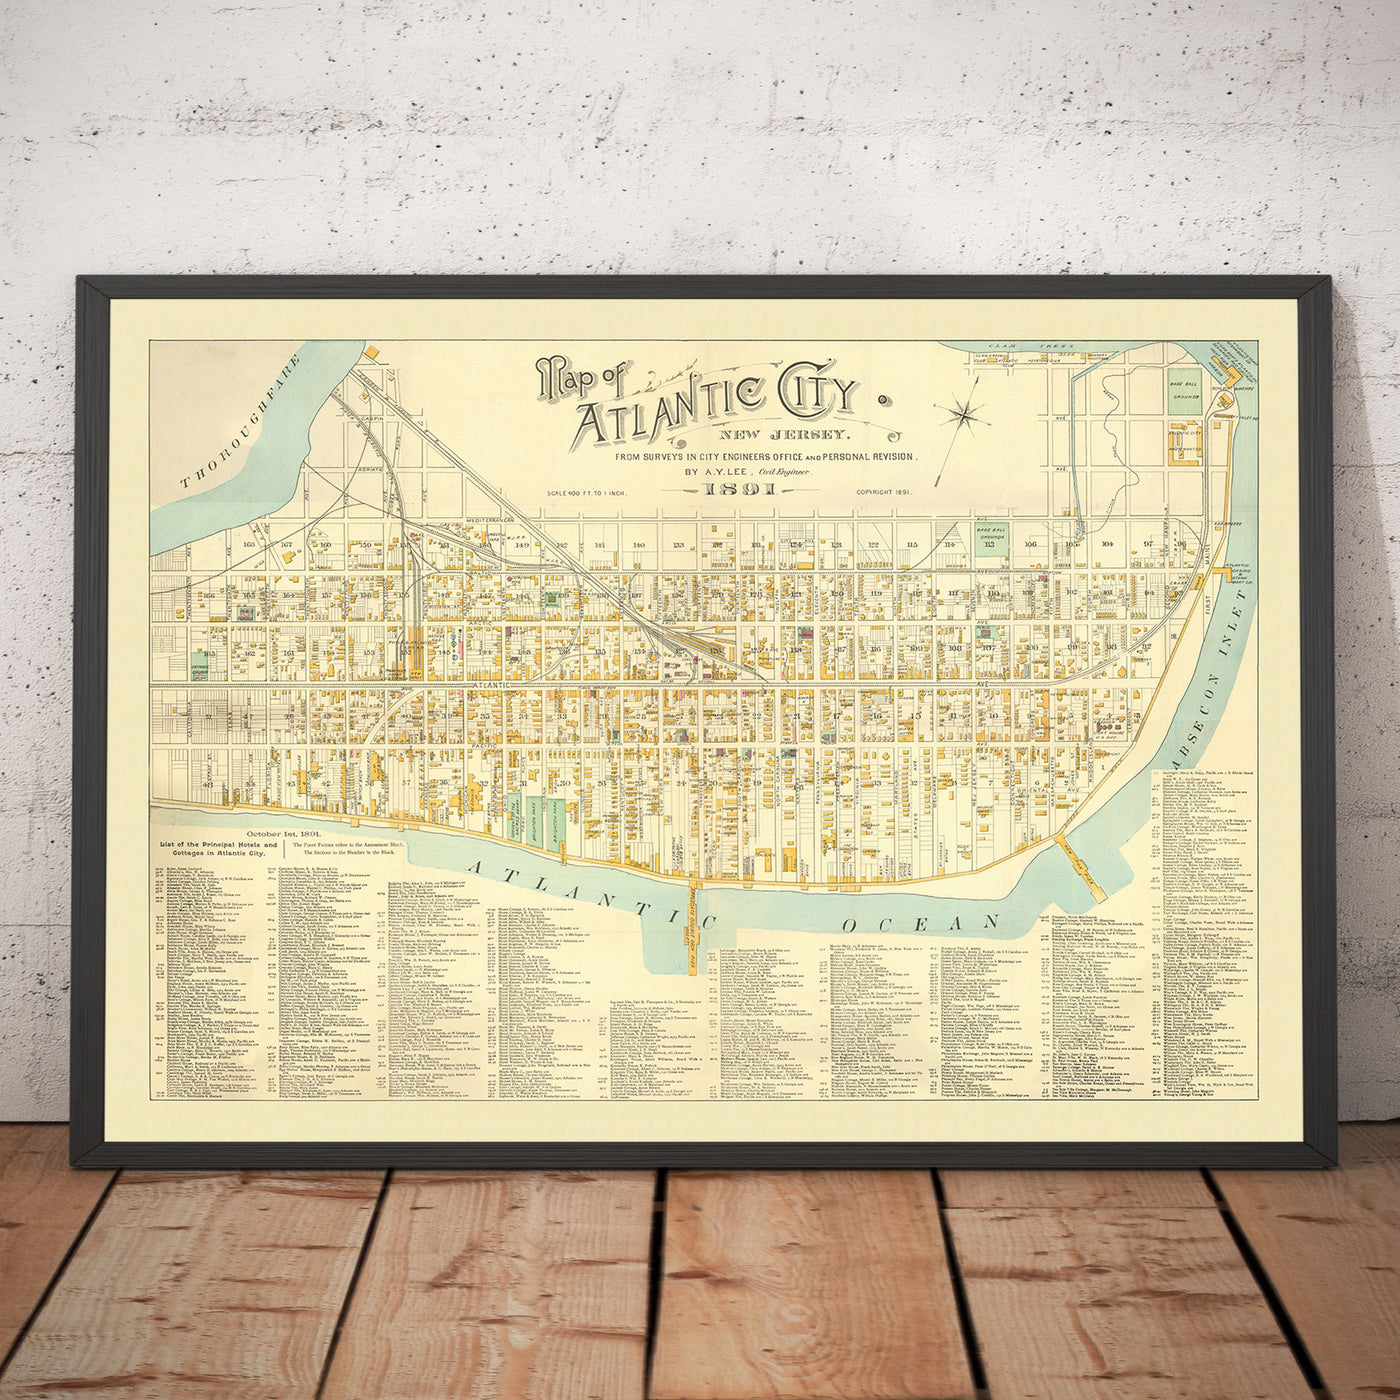 Alte Karte von Atlantic City, New Jersey, im Jahr 1891 von AY Lee - Boardwalk, Pacific, Baltic, Atlantic, Delaware Avenue